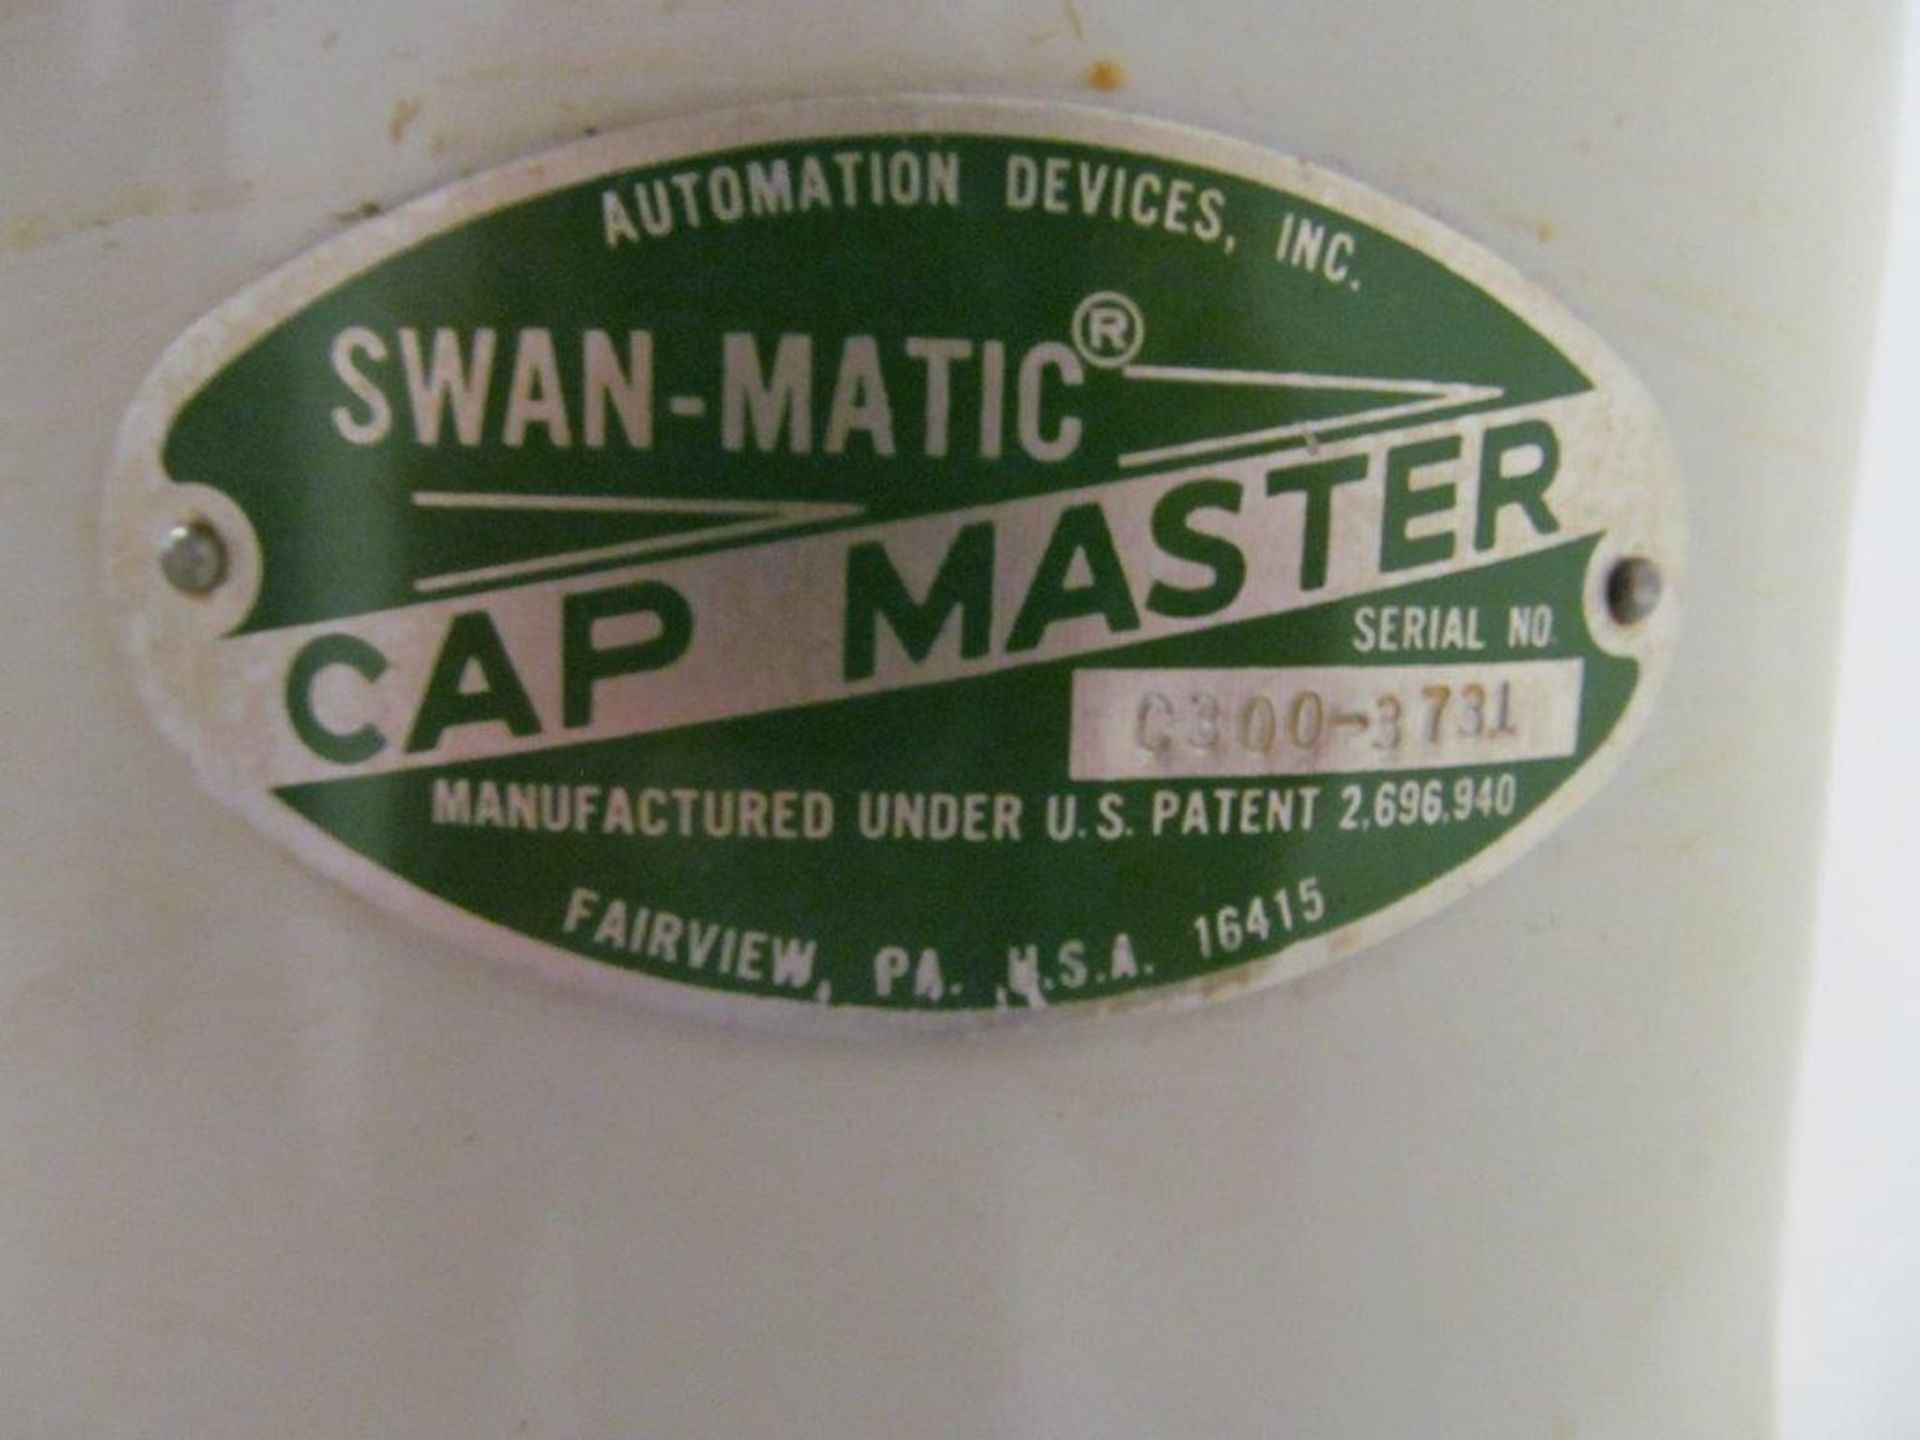 CAP MASTER CONTROLLER, SWAN-MATIC (U.S.A) MODEL C302E, S/N C300-3731, ELECTRICS 120V/1PH/60C - Image 4 of 4